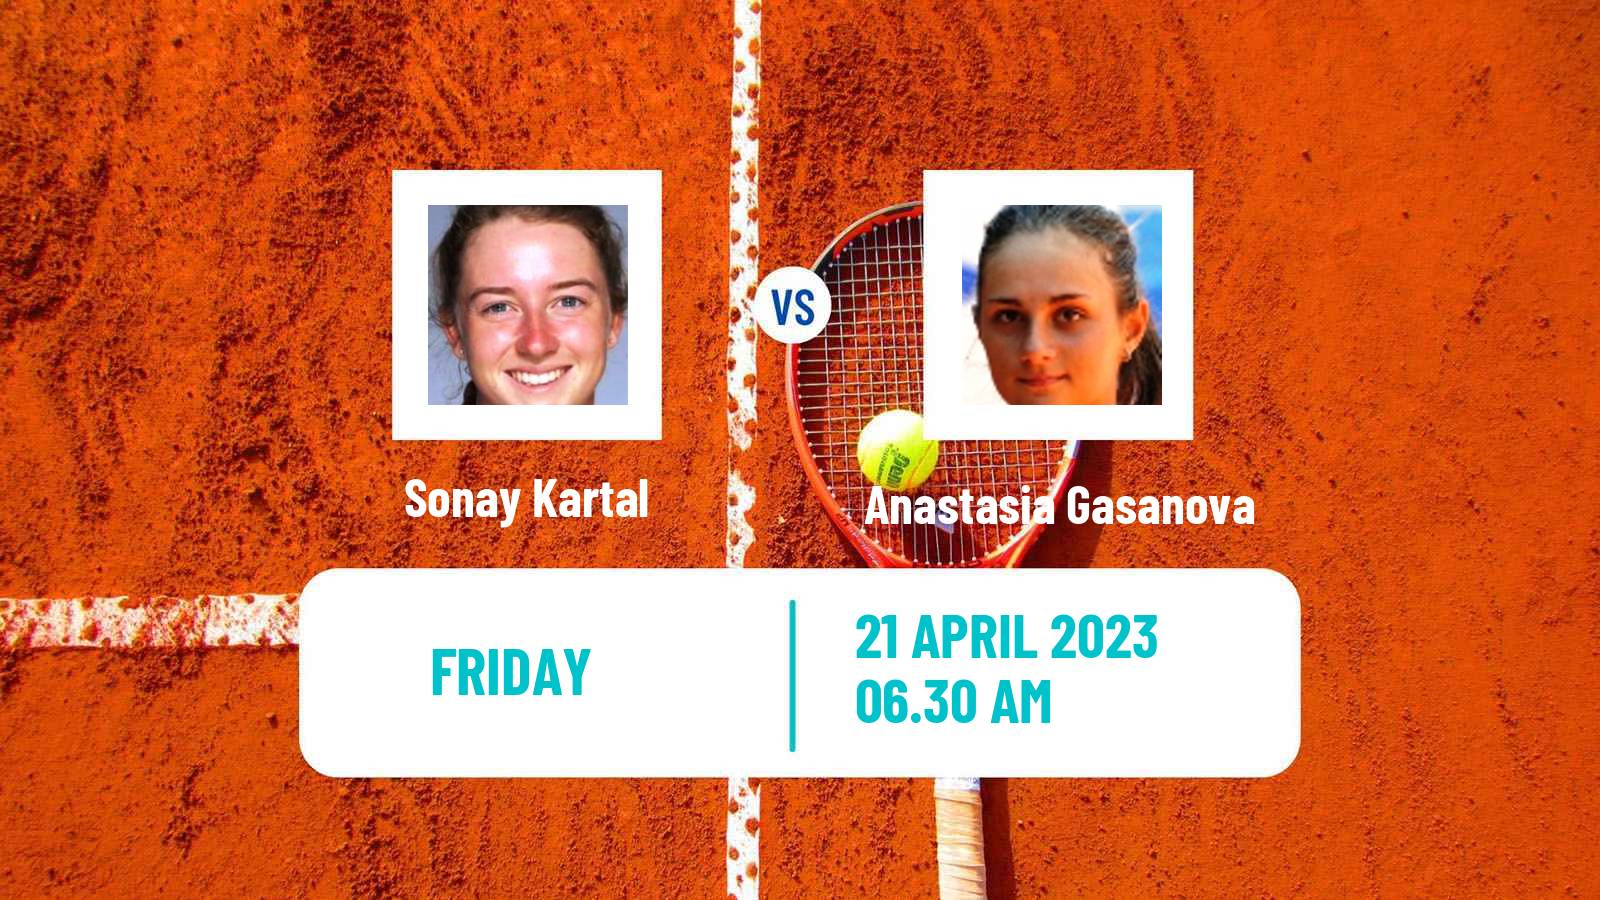 Tennis ITF Tournaments Sonay Kartal - Anastasia Gasanova